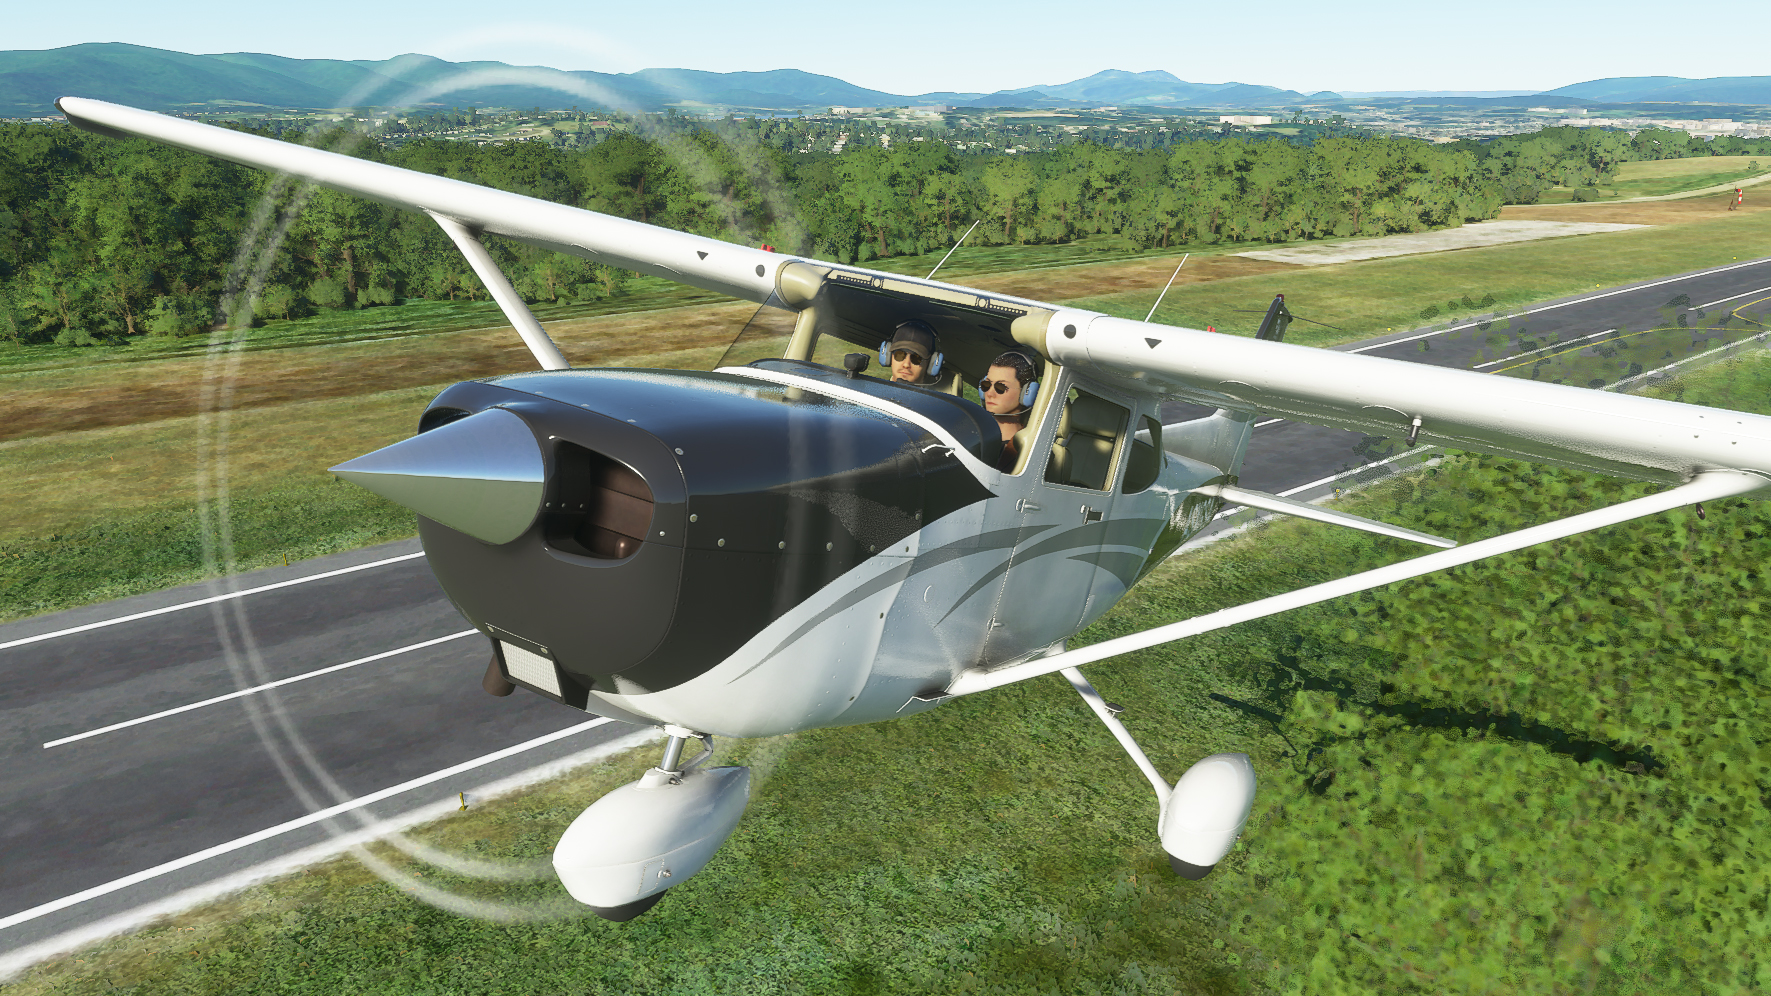 Microsoft Flight Simulator Update Cuts Its 170 GB Base Game Size